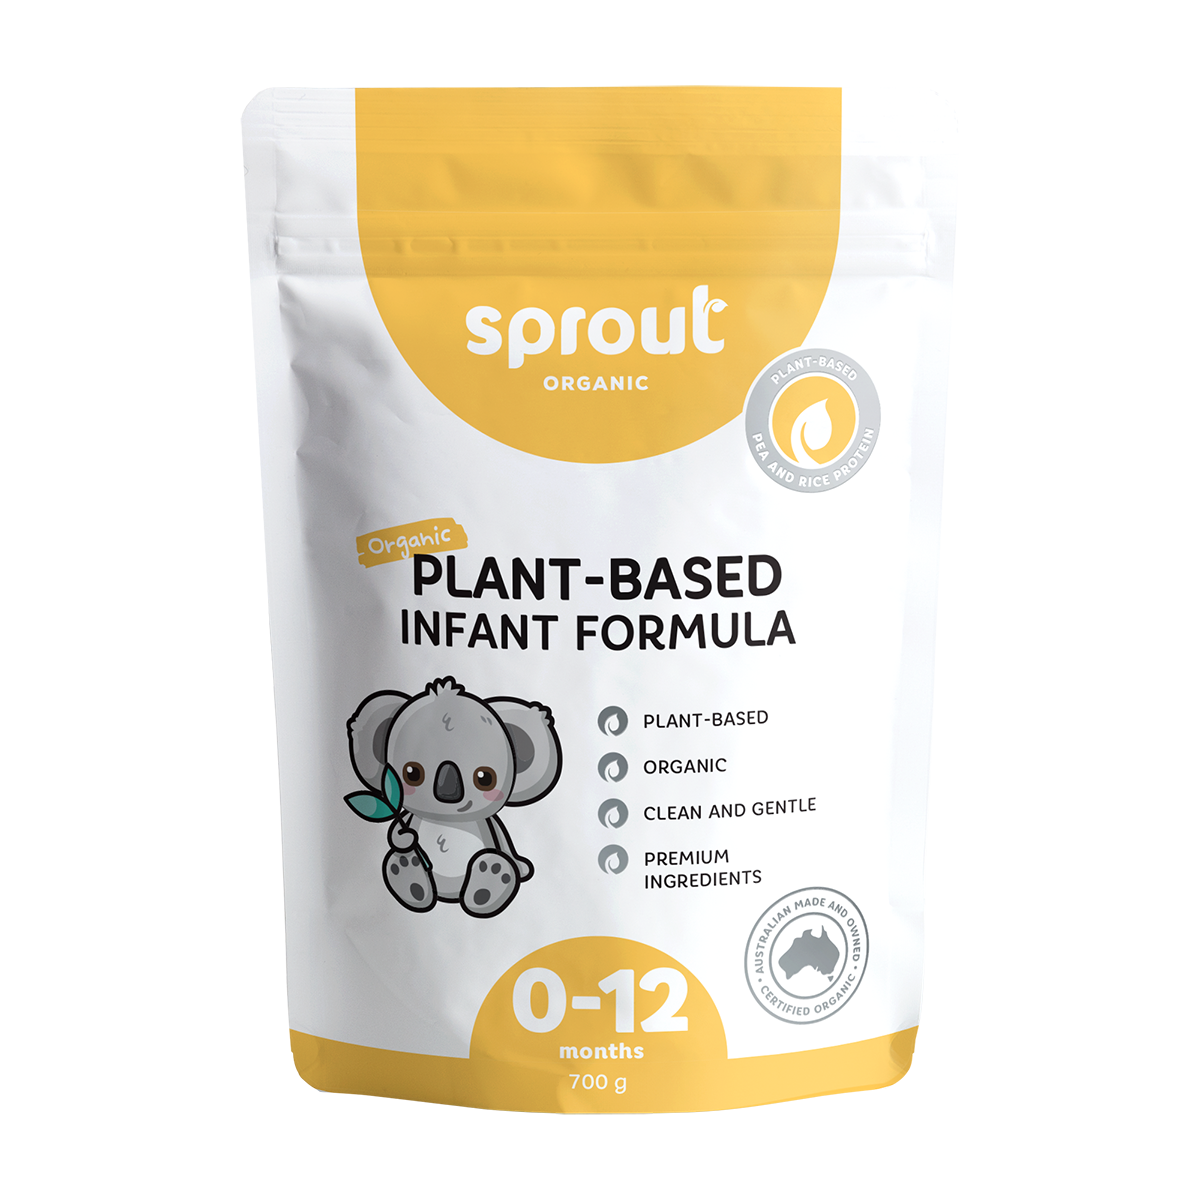 Sprout Organic Plant-Based Infant Formula 0-12 Months 700g (Ships June)